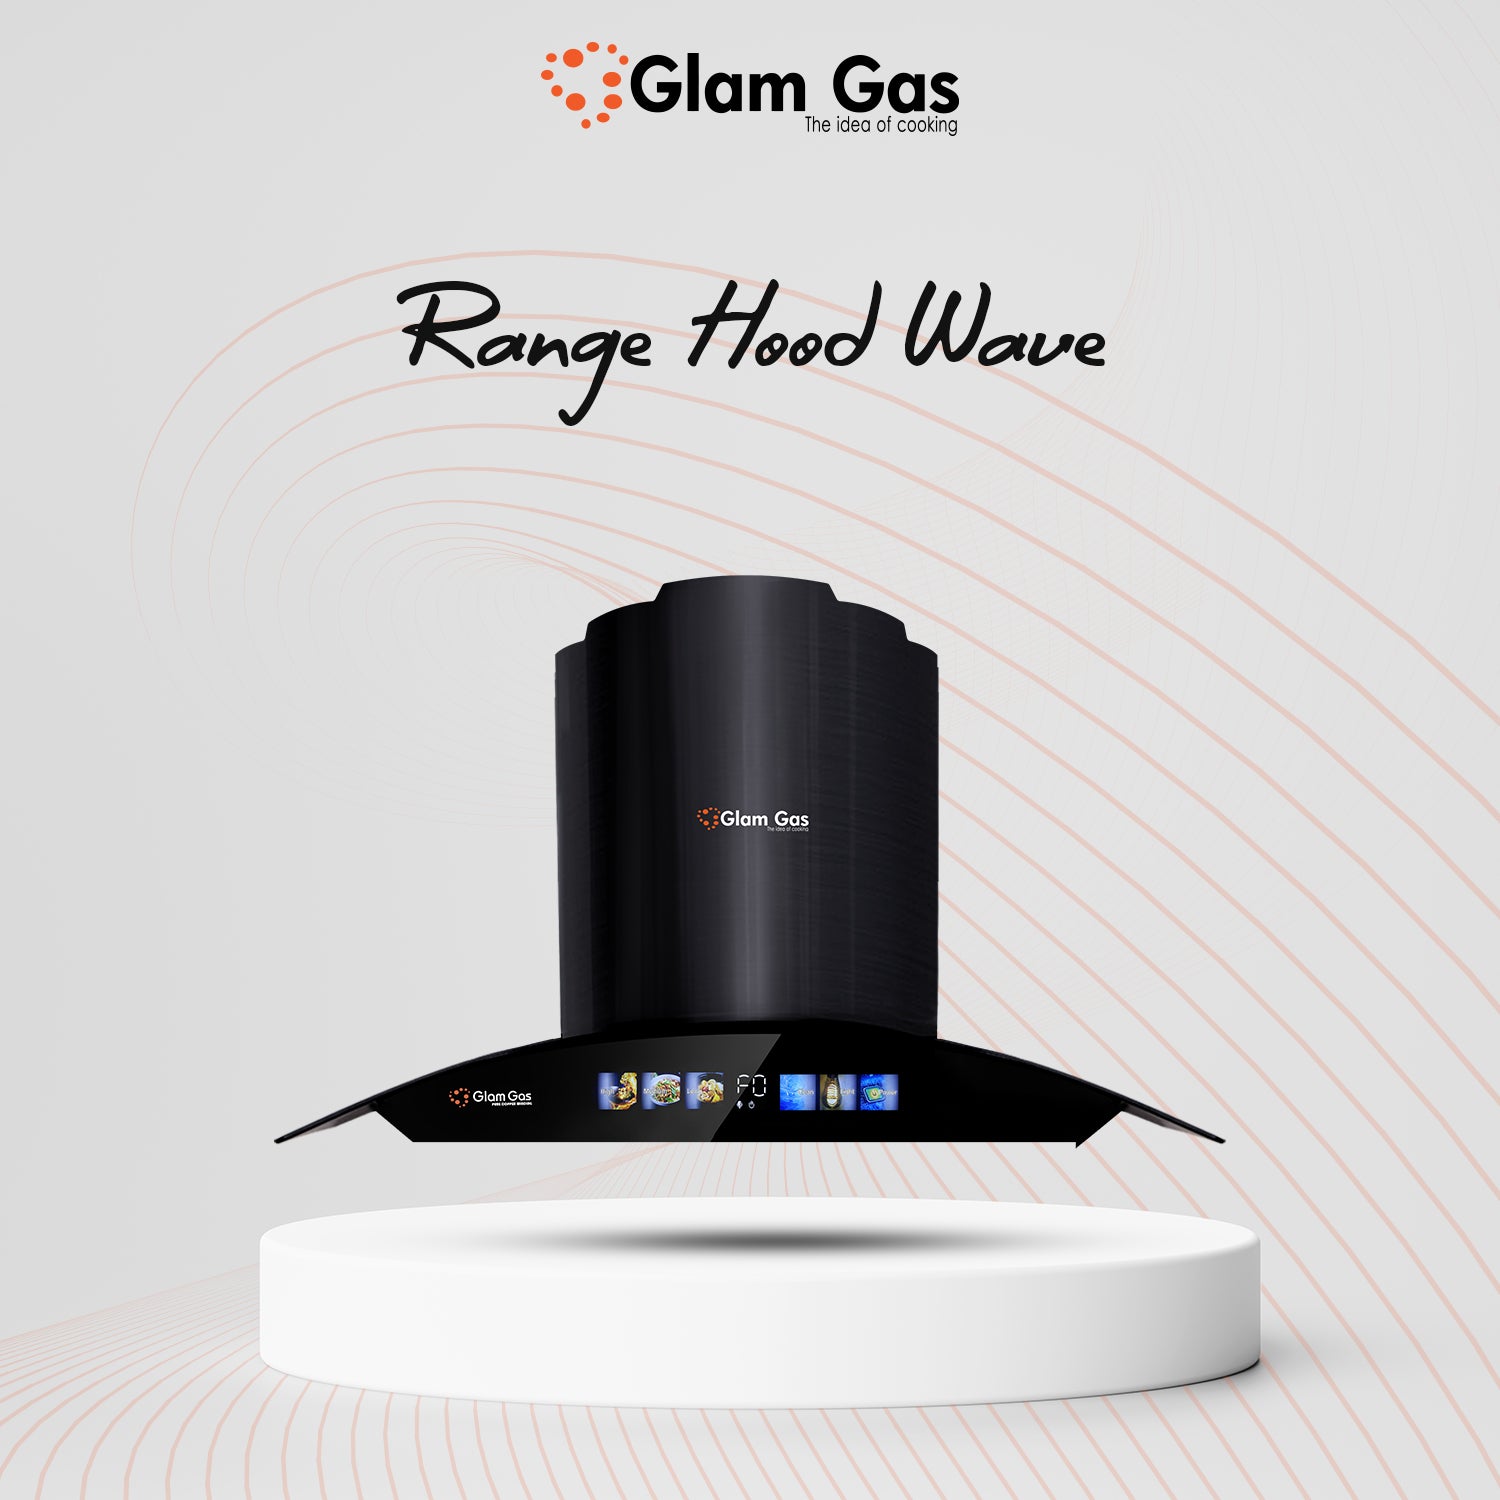 Just A Few Click To Buy Now Range Hood Wave | Glamgas Range Hood Wave.